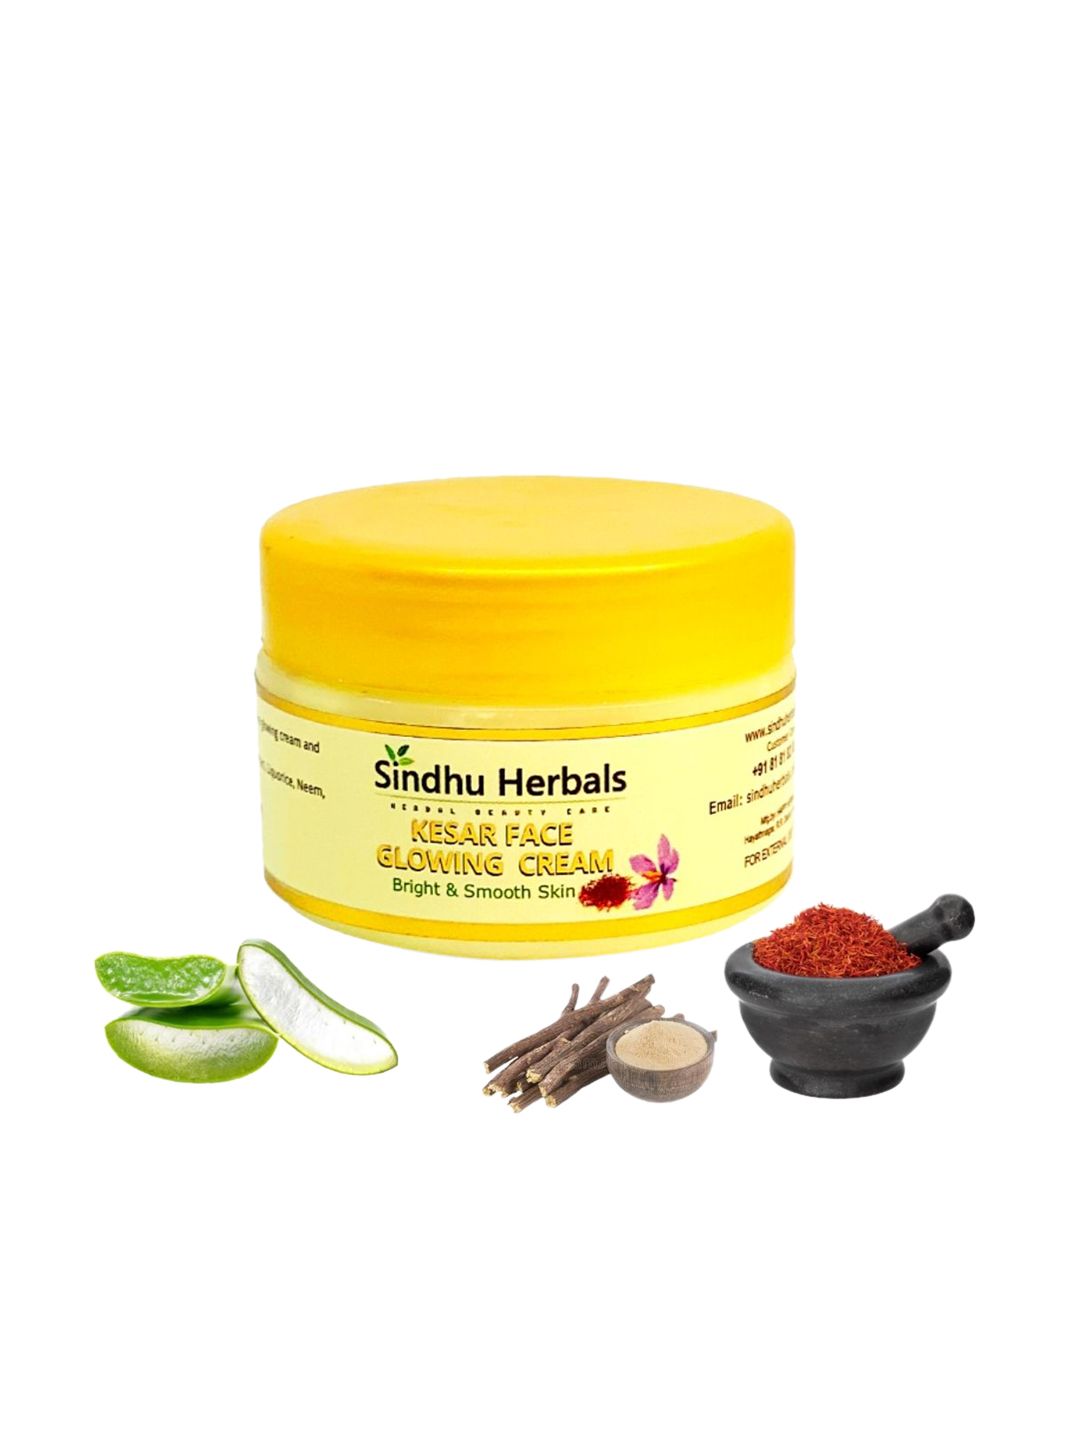 Sindhu Herbals Bright & Smooth Skin Kesar Face Glowing Cream 30 g